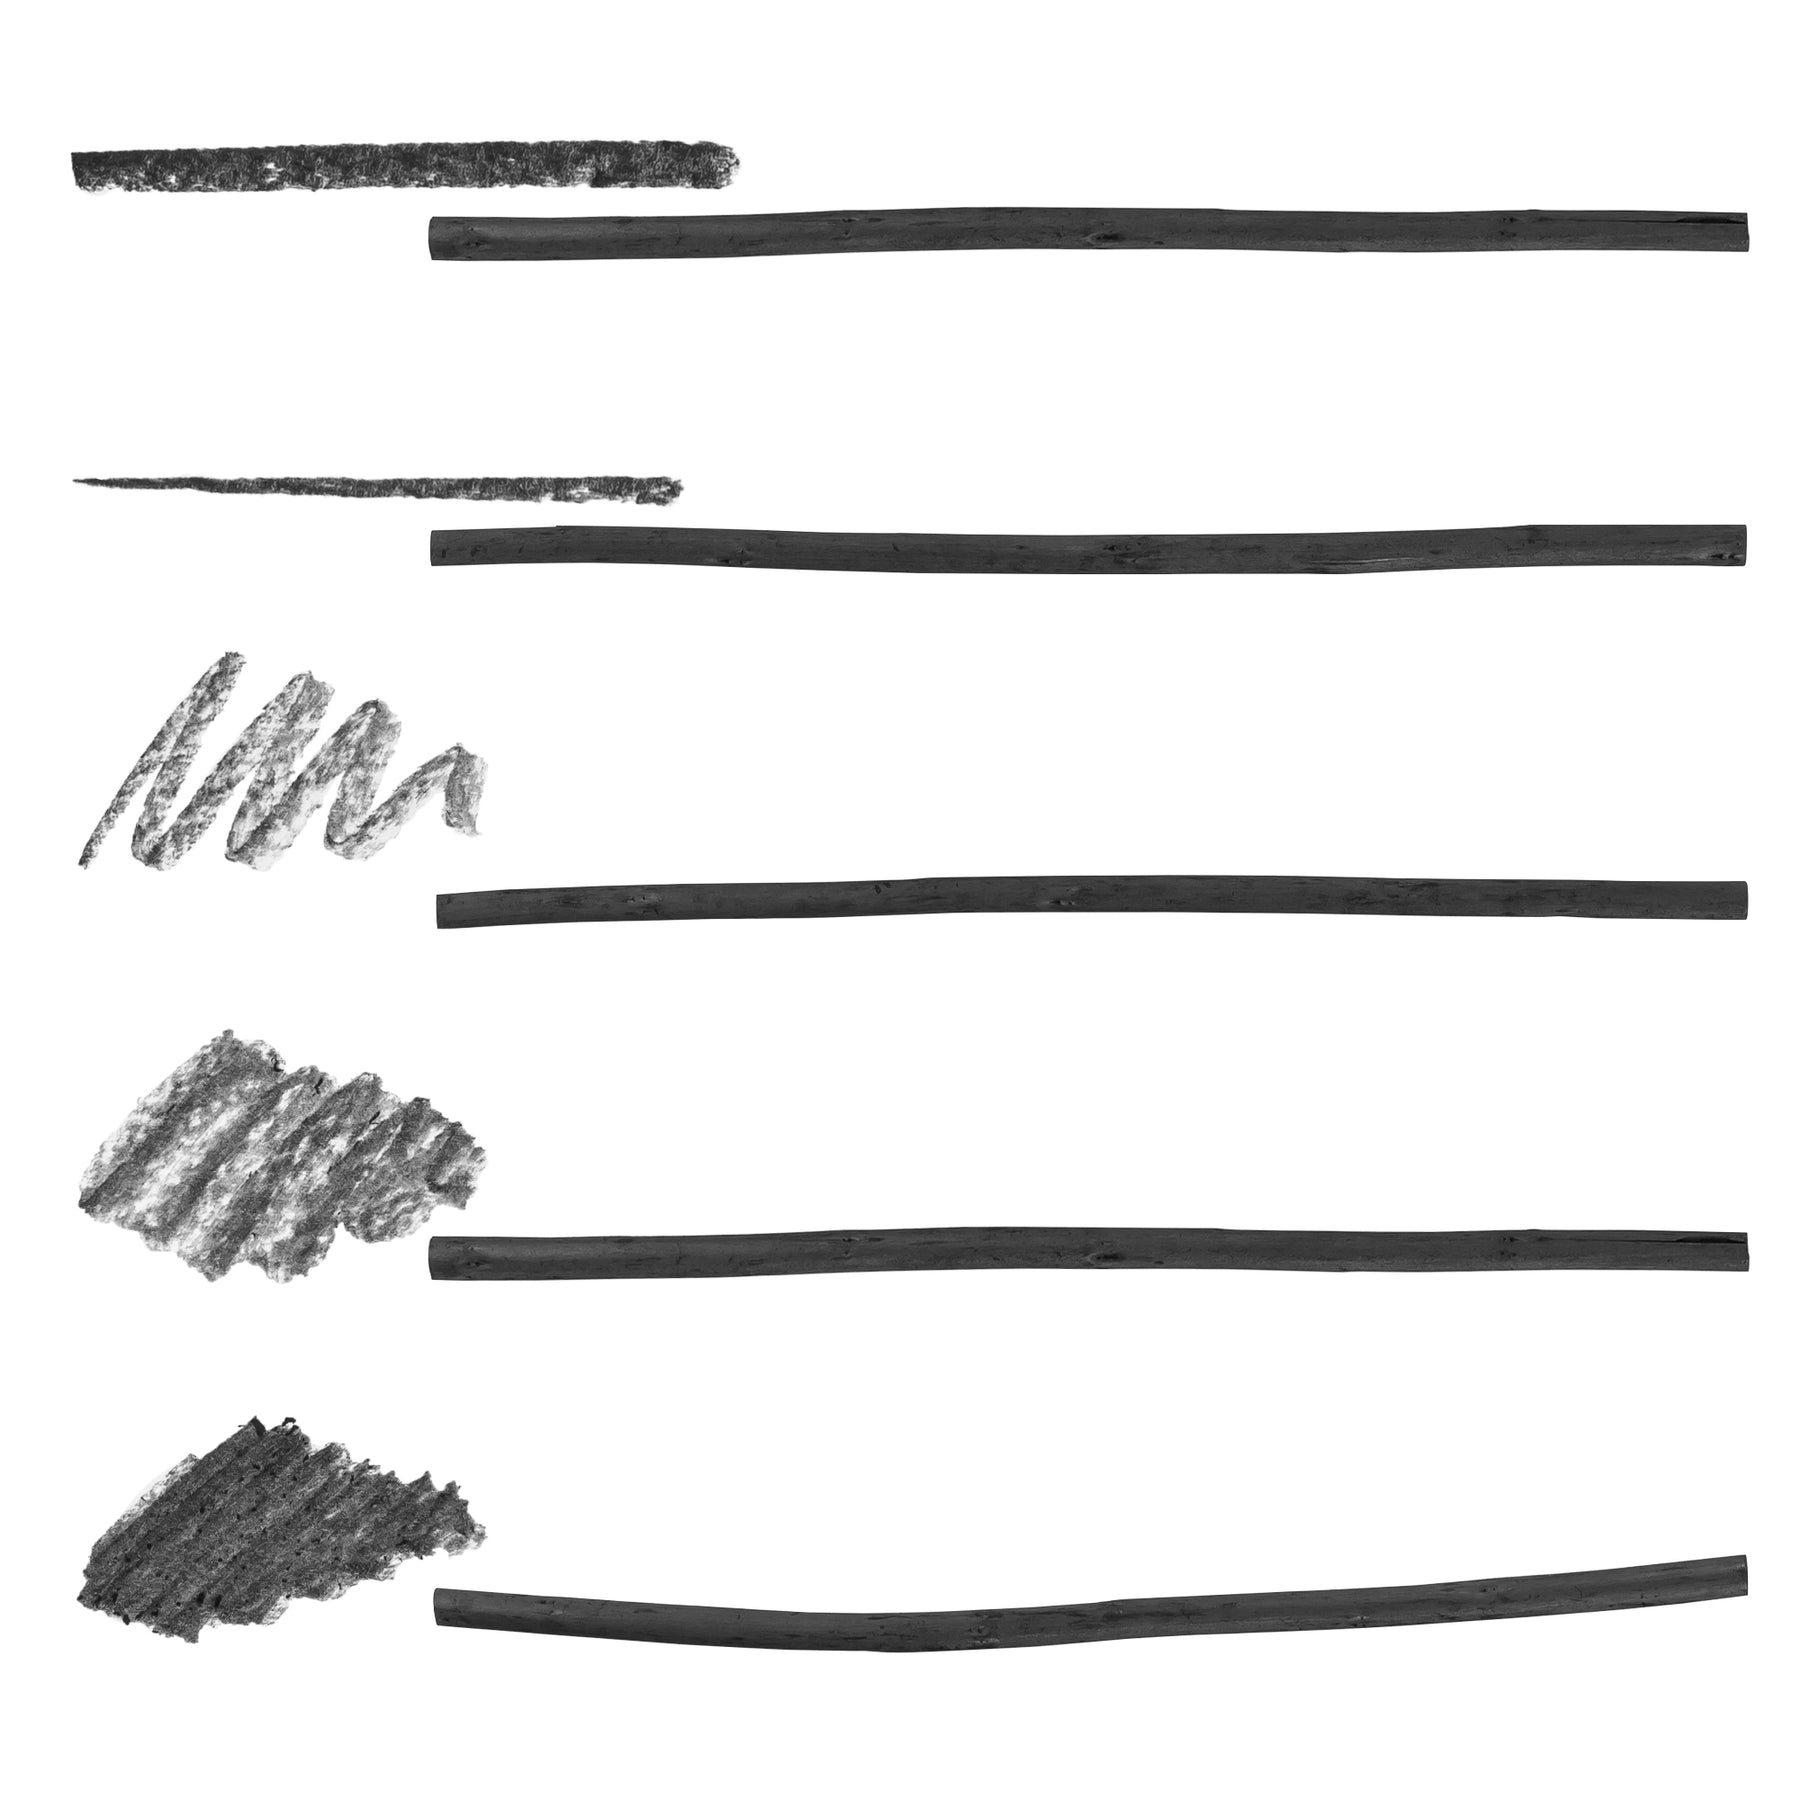 Vine charcoal - Medium - 12 sticks - Pacific arc